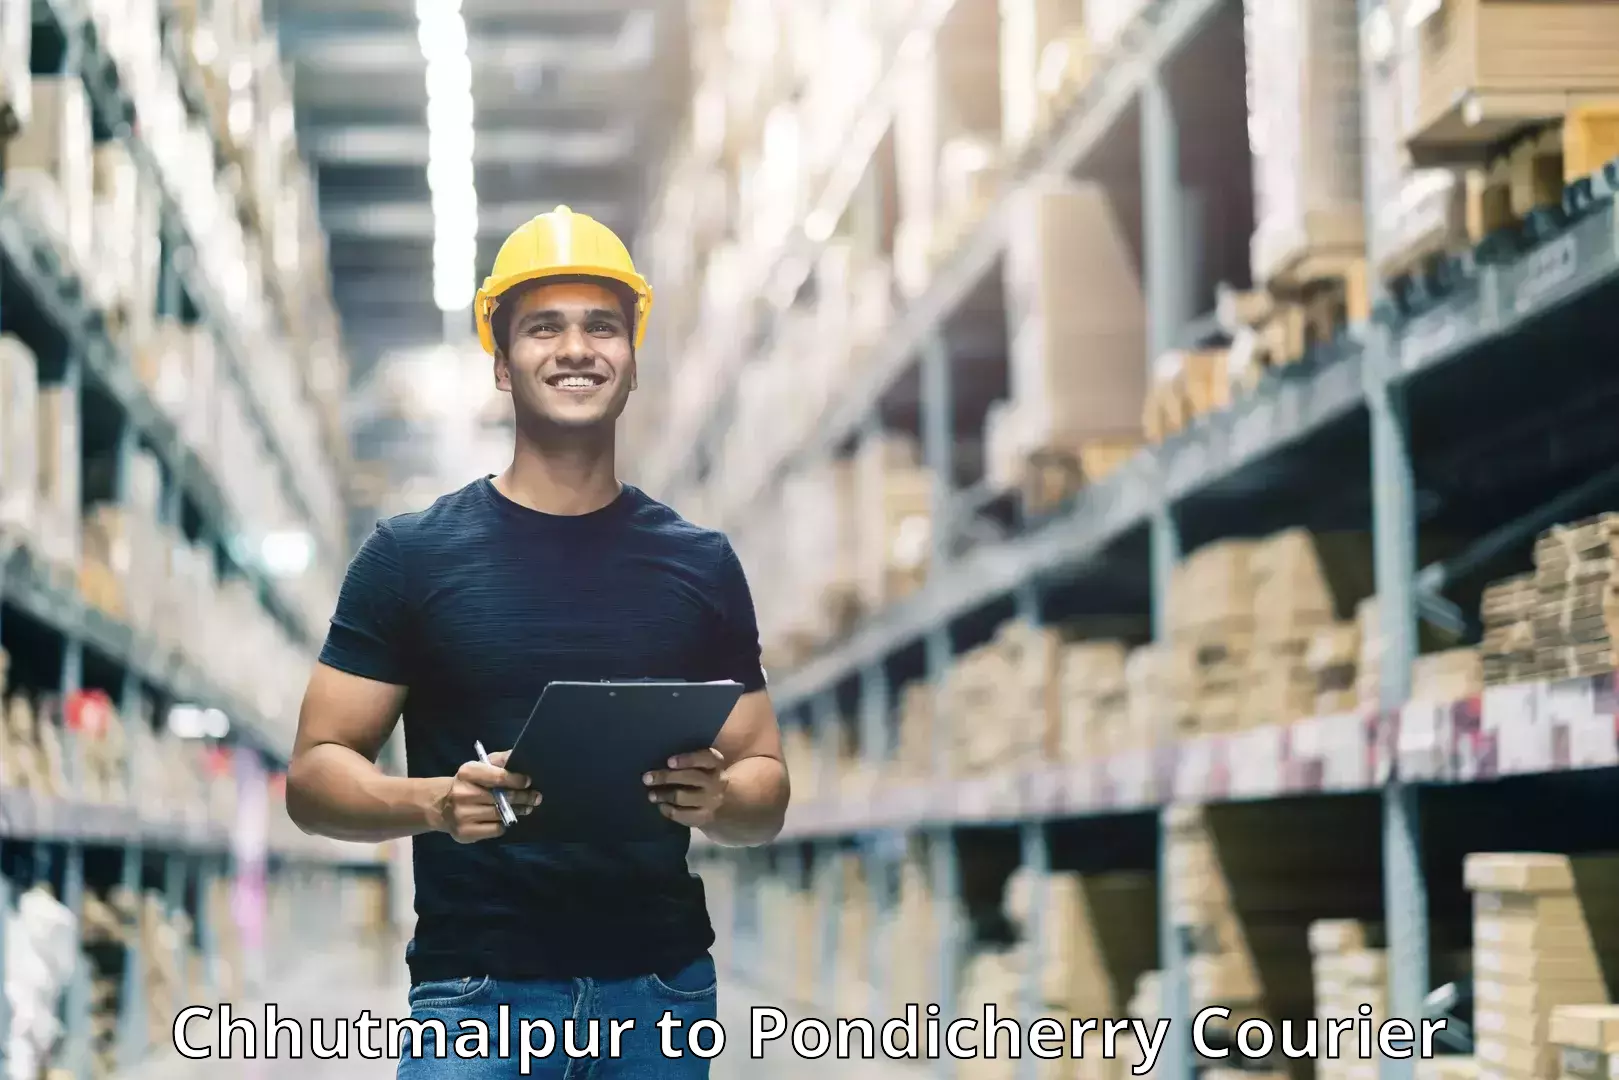 Reliable logistics providers Chhutmalpur to Pondicherry